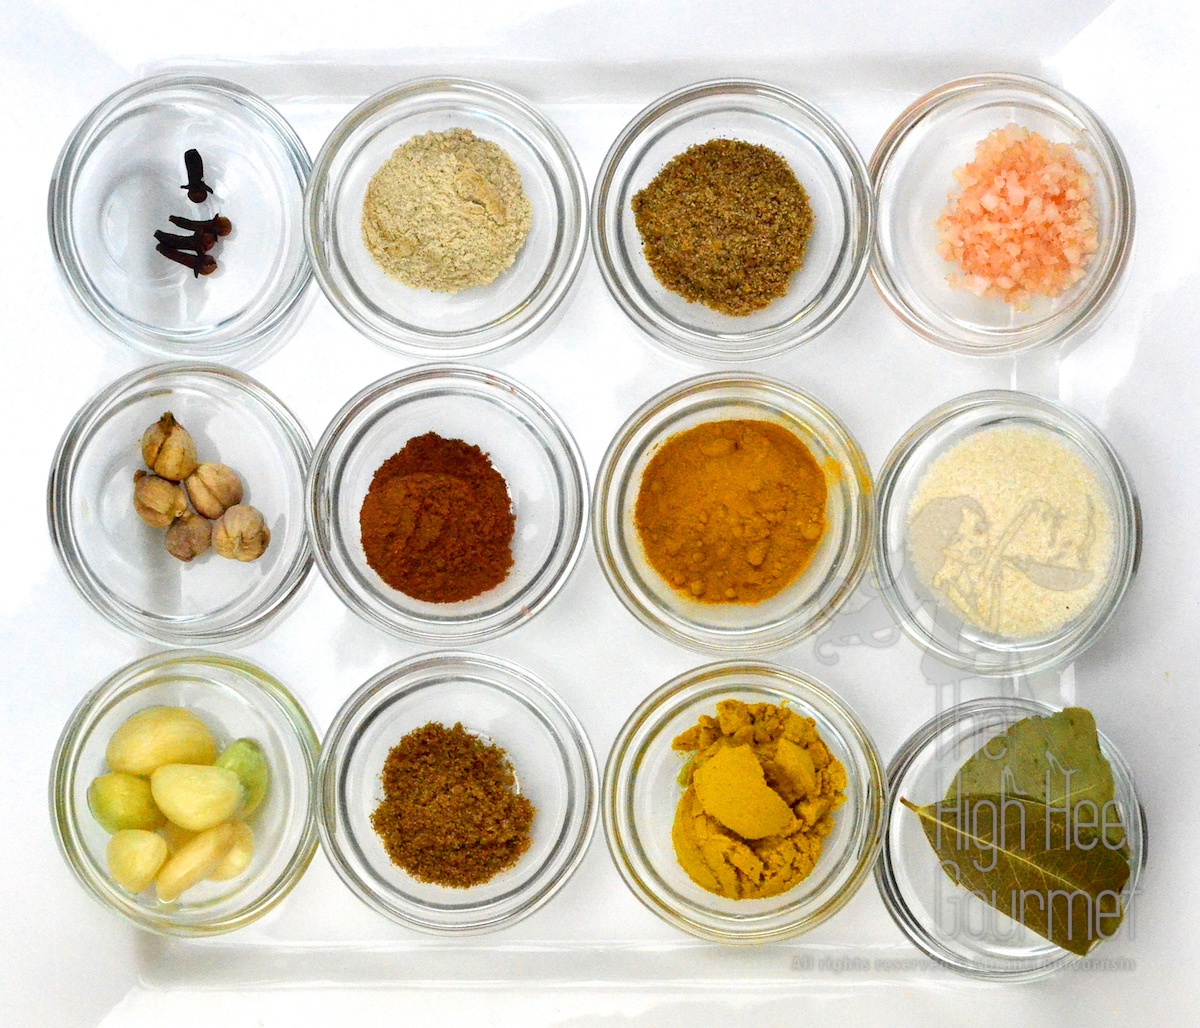 Top from left to right: Clove, White Pepper, Ground Coriander, Himalayan Salt Middle: White Cardamom, Cinnamon powder, Turmeric powder, Granulated Sugar Bottom: Garlic, Ground Cumin, Curry powder, Bay leaf